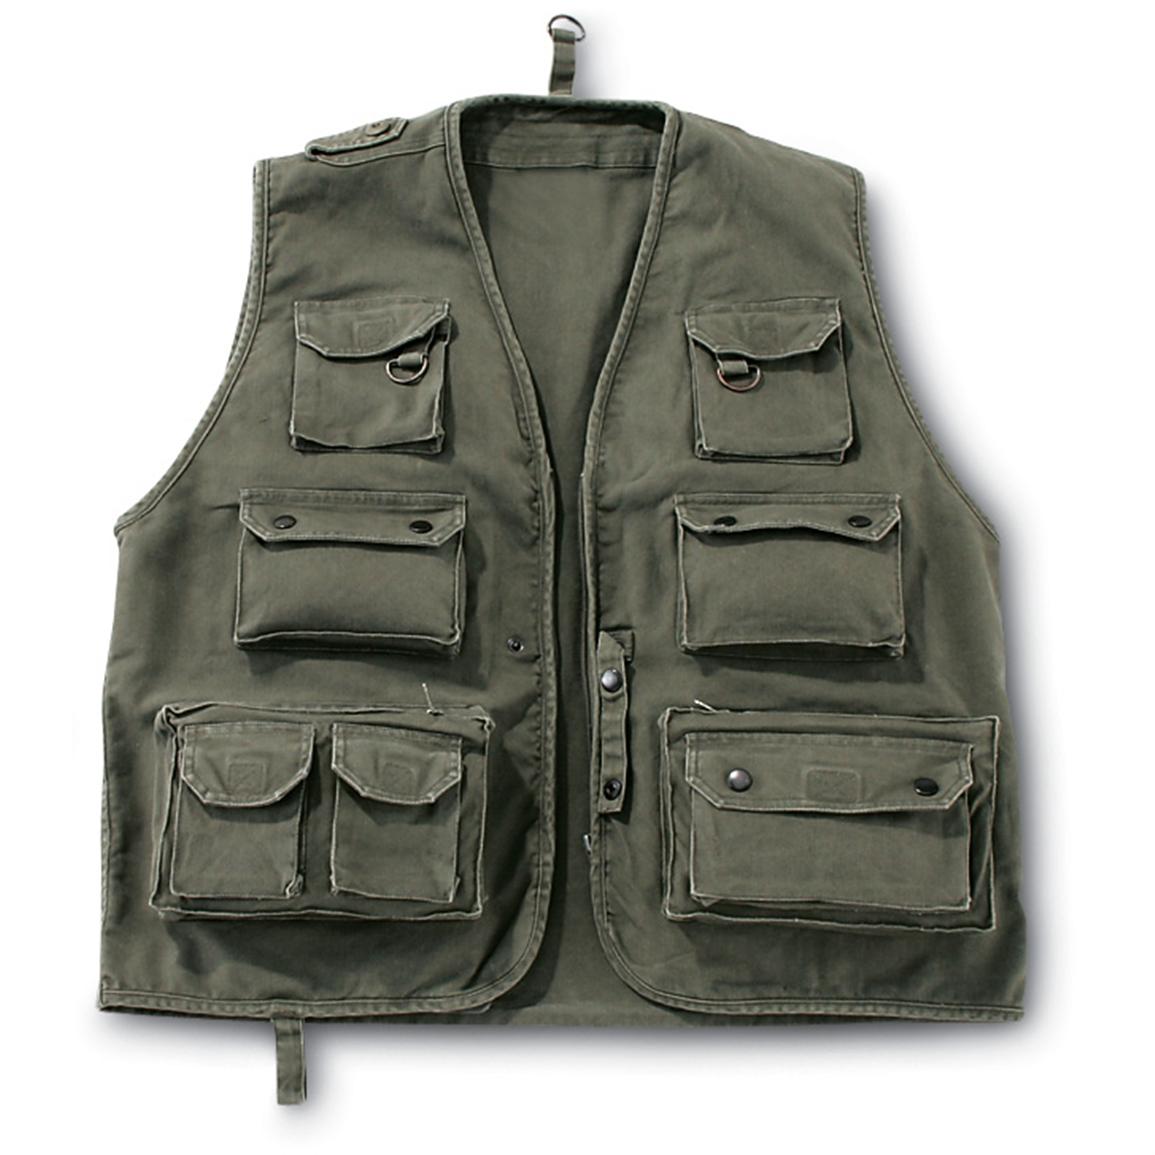 Mil-Tec® Moleskin Survival Vest - 89287, Shirts at Sportsman's Guide